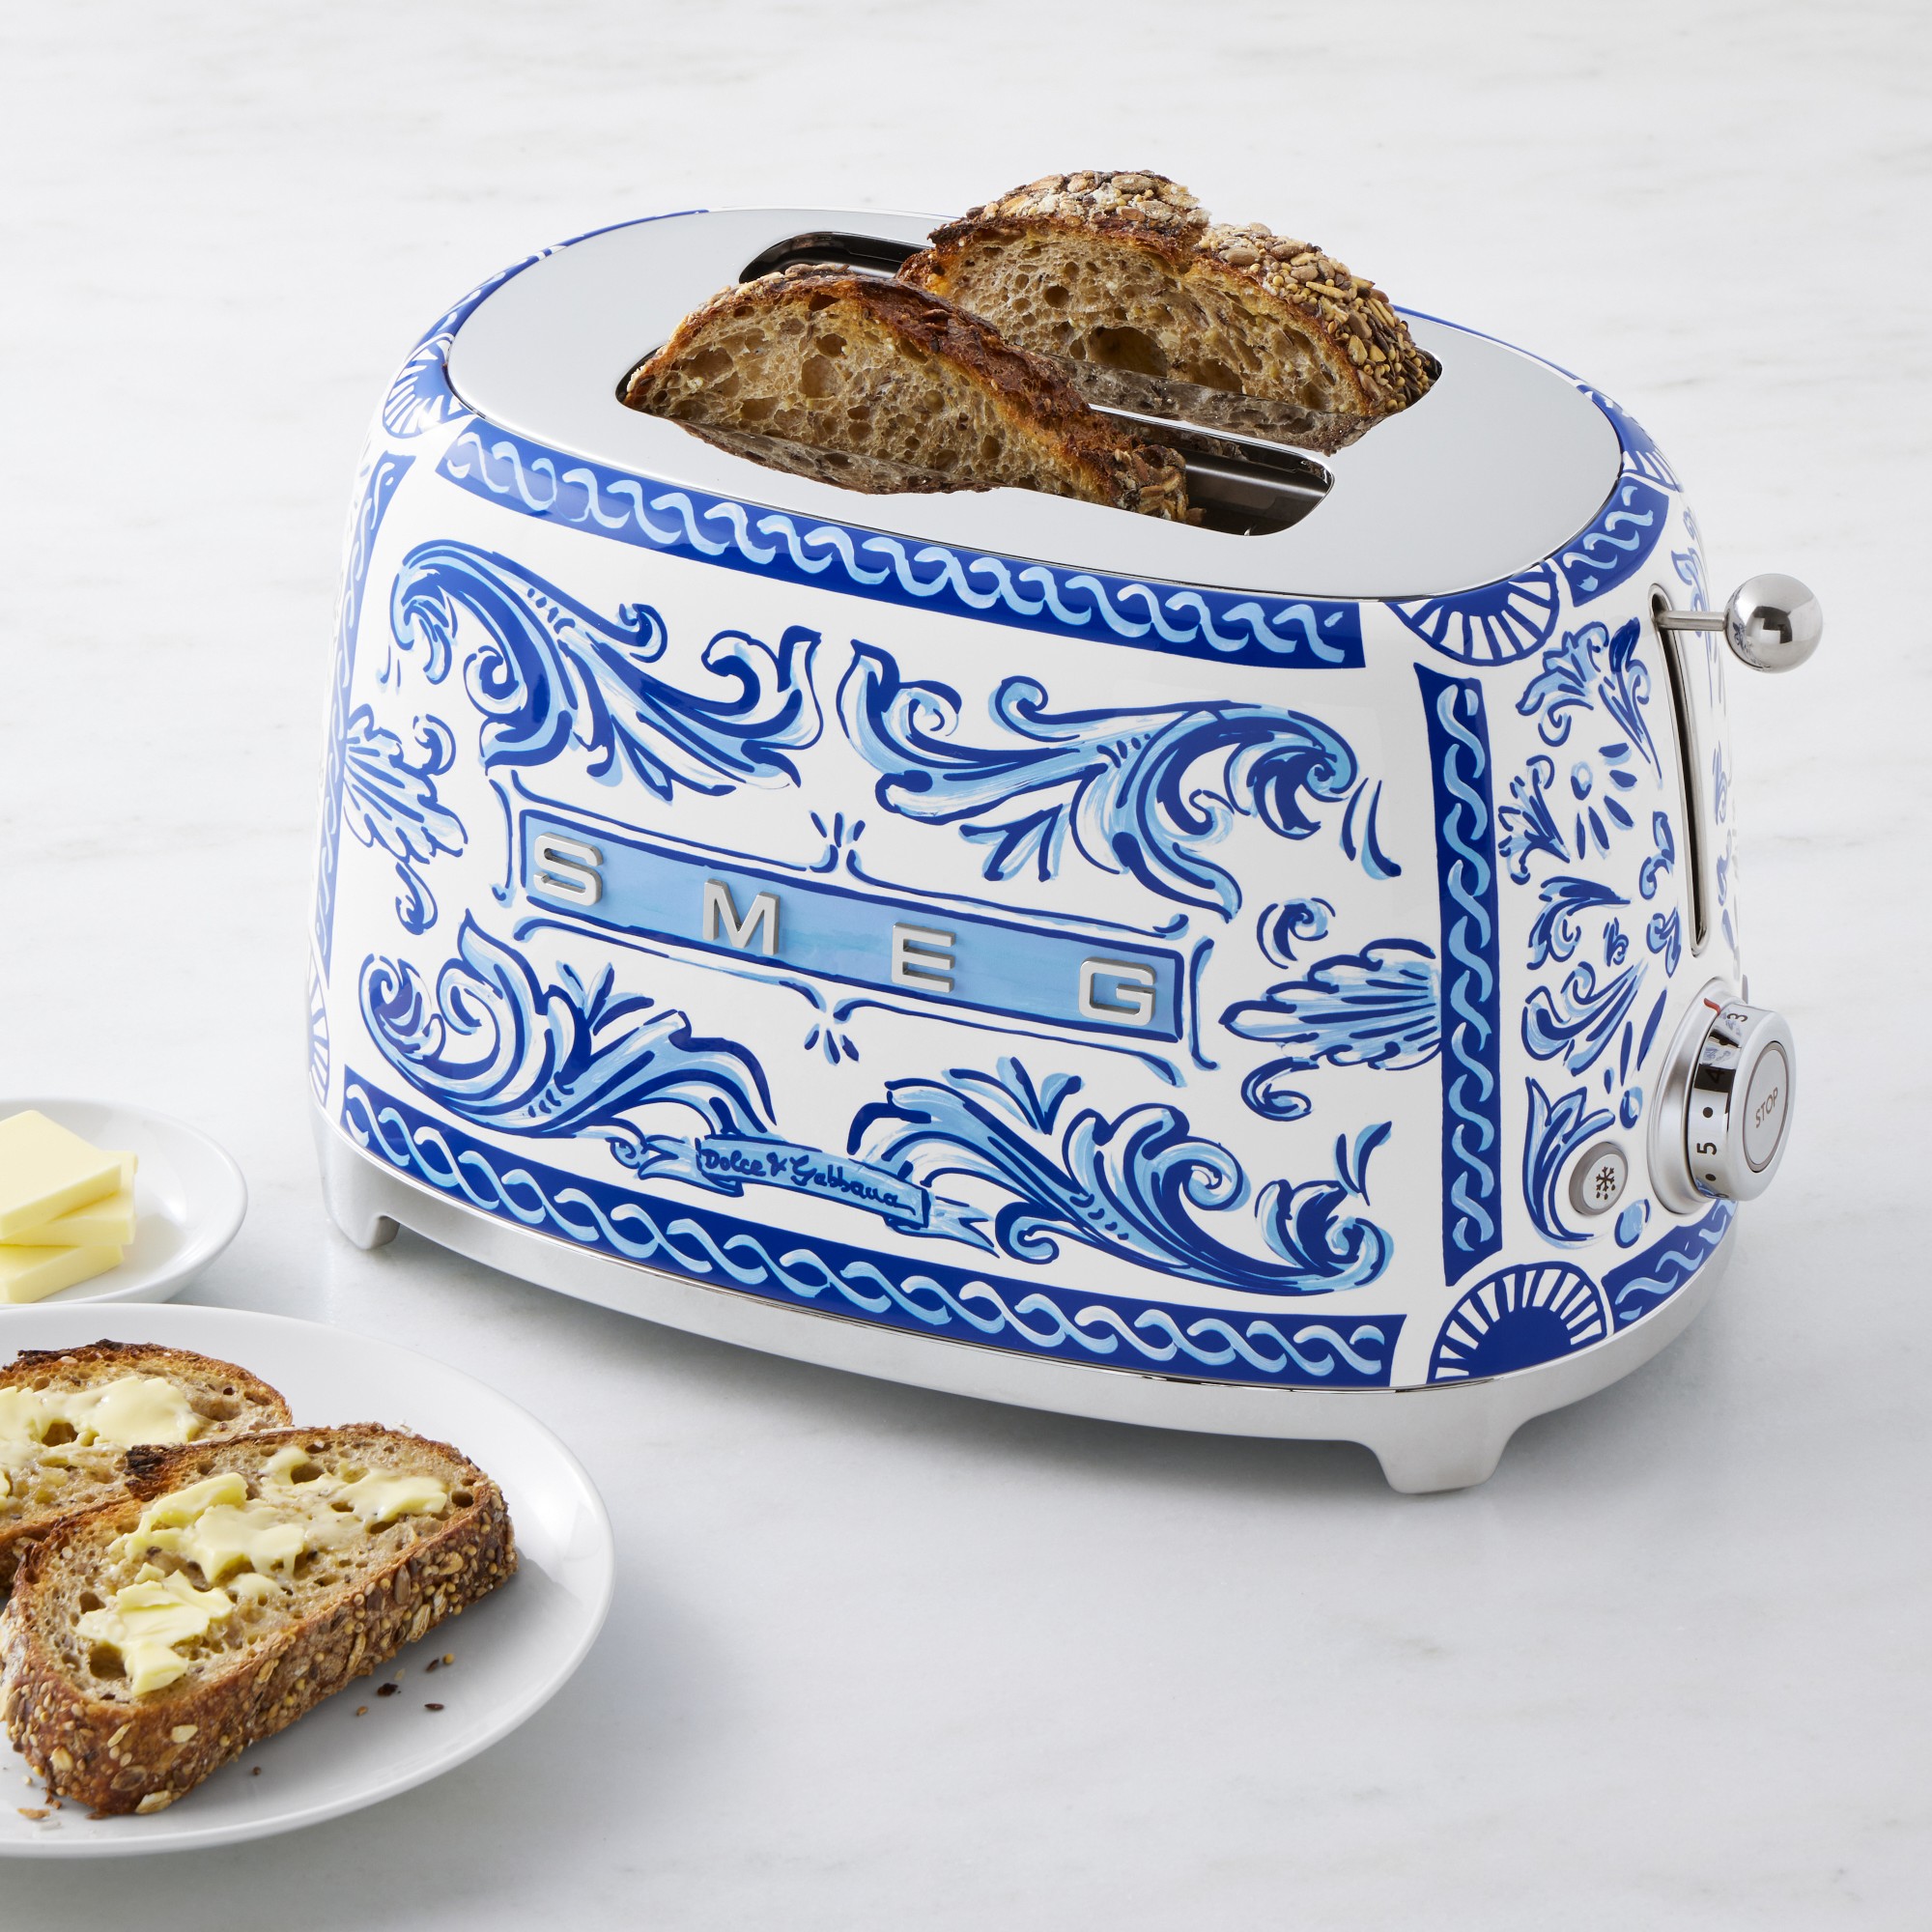 SMEG Dolce & Gabbana 2-Slice Toaster, Blu Mediterraneo